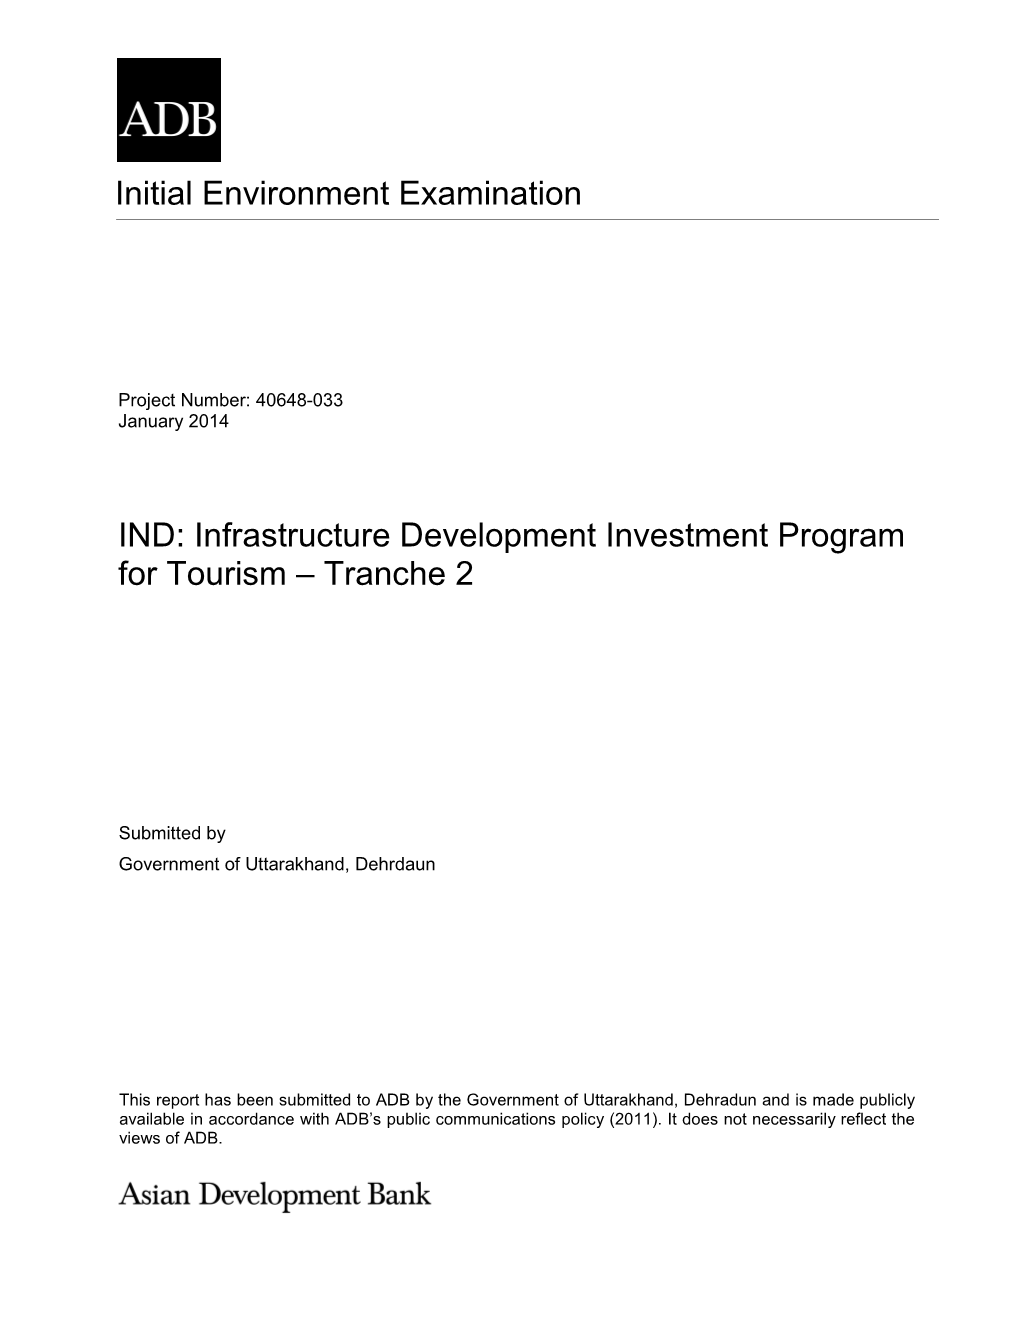 40648-033: Infrastructure Development Investment Program